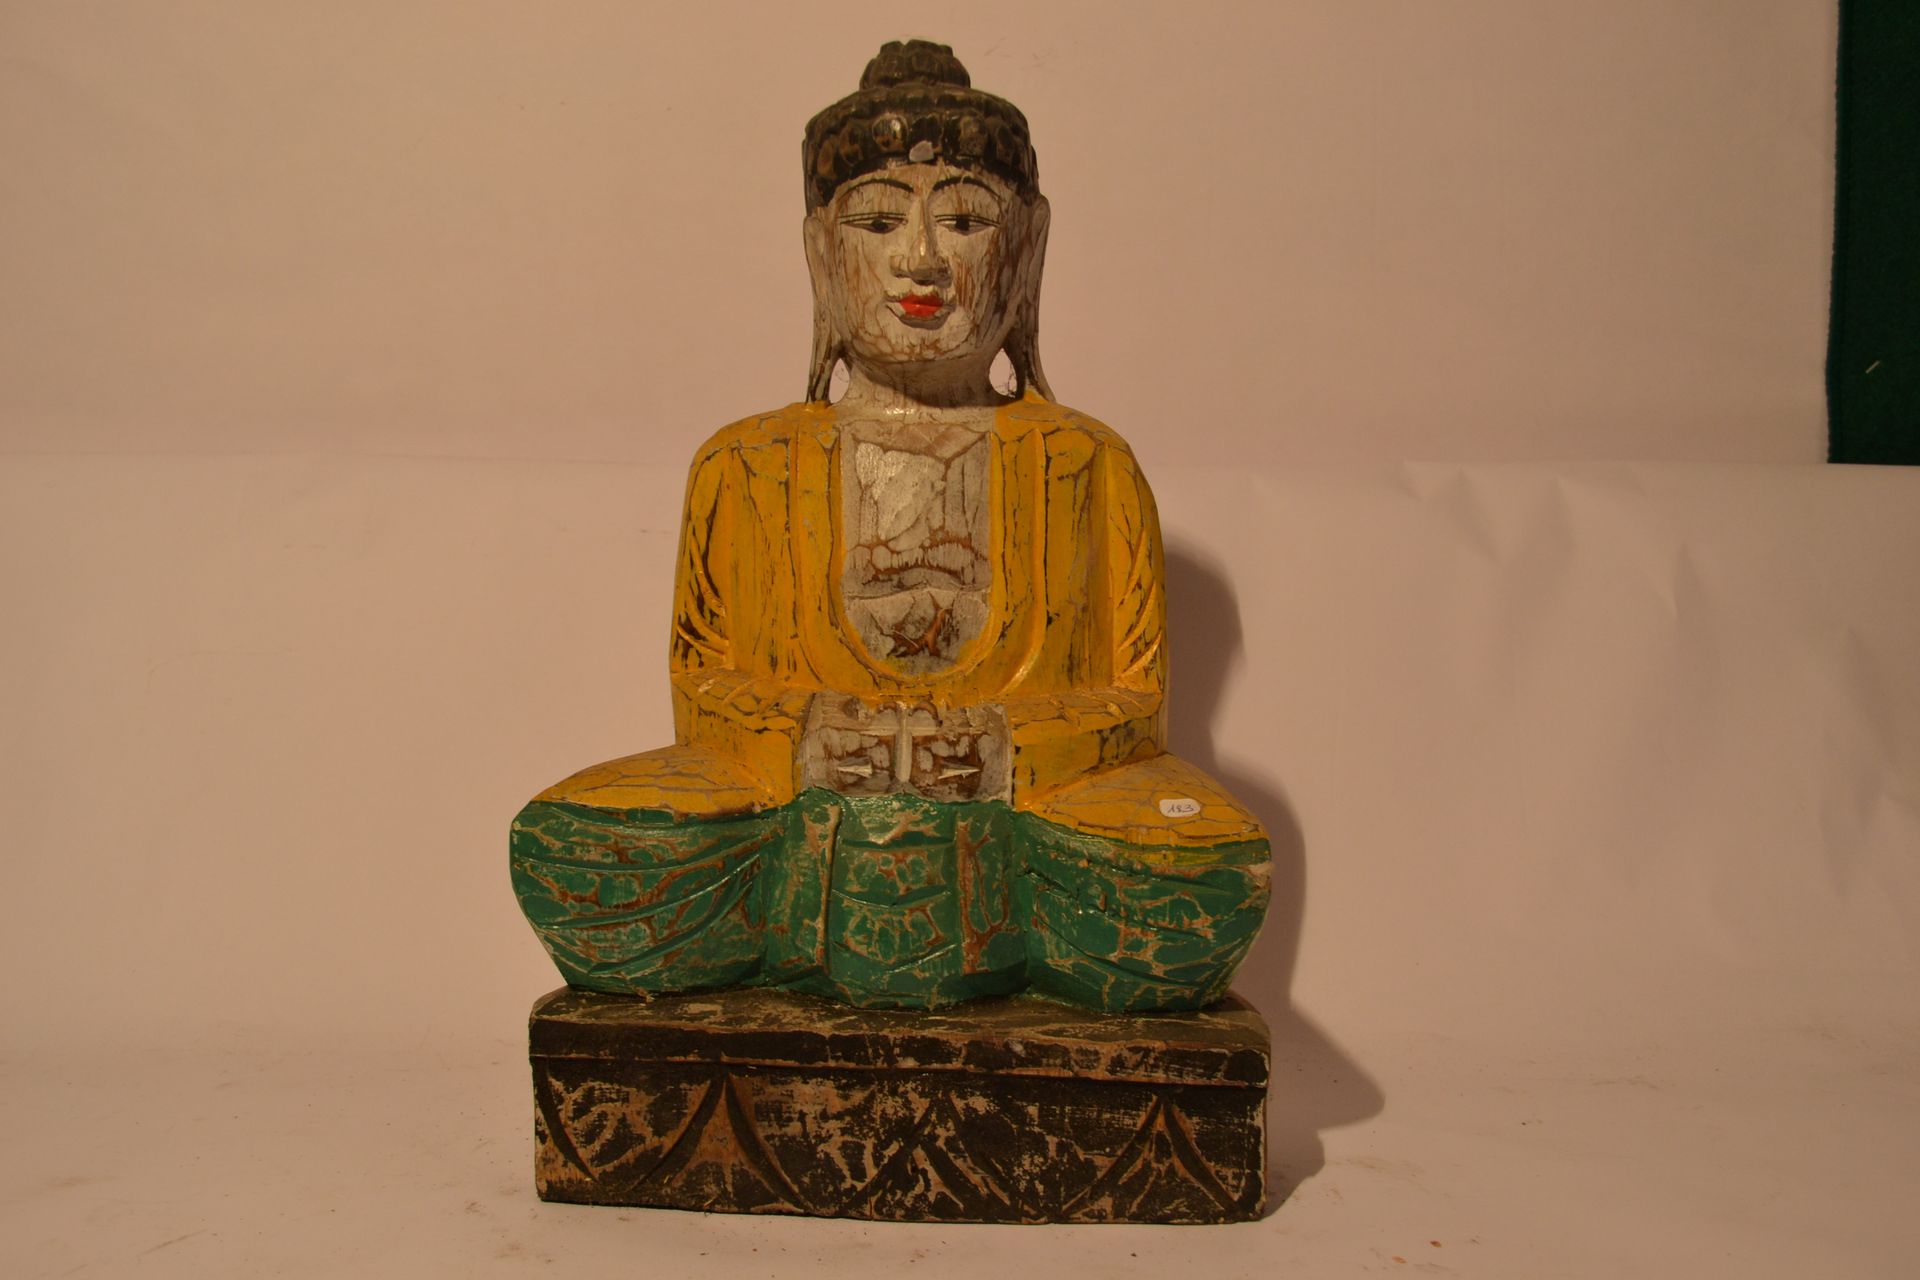 Null Buda sentado, policromado 

Madera exótica

40 x 25 x 10 cm

peso :1,5 Kg